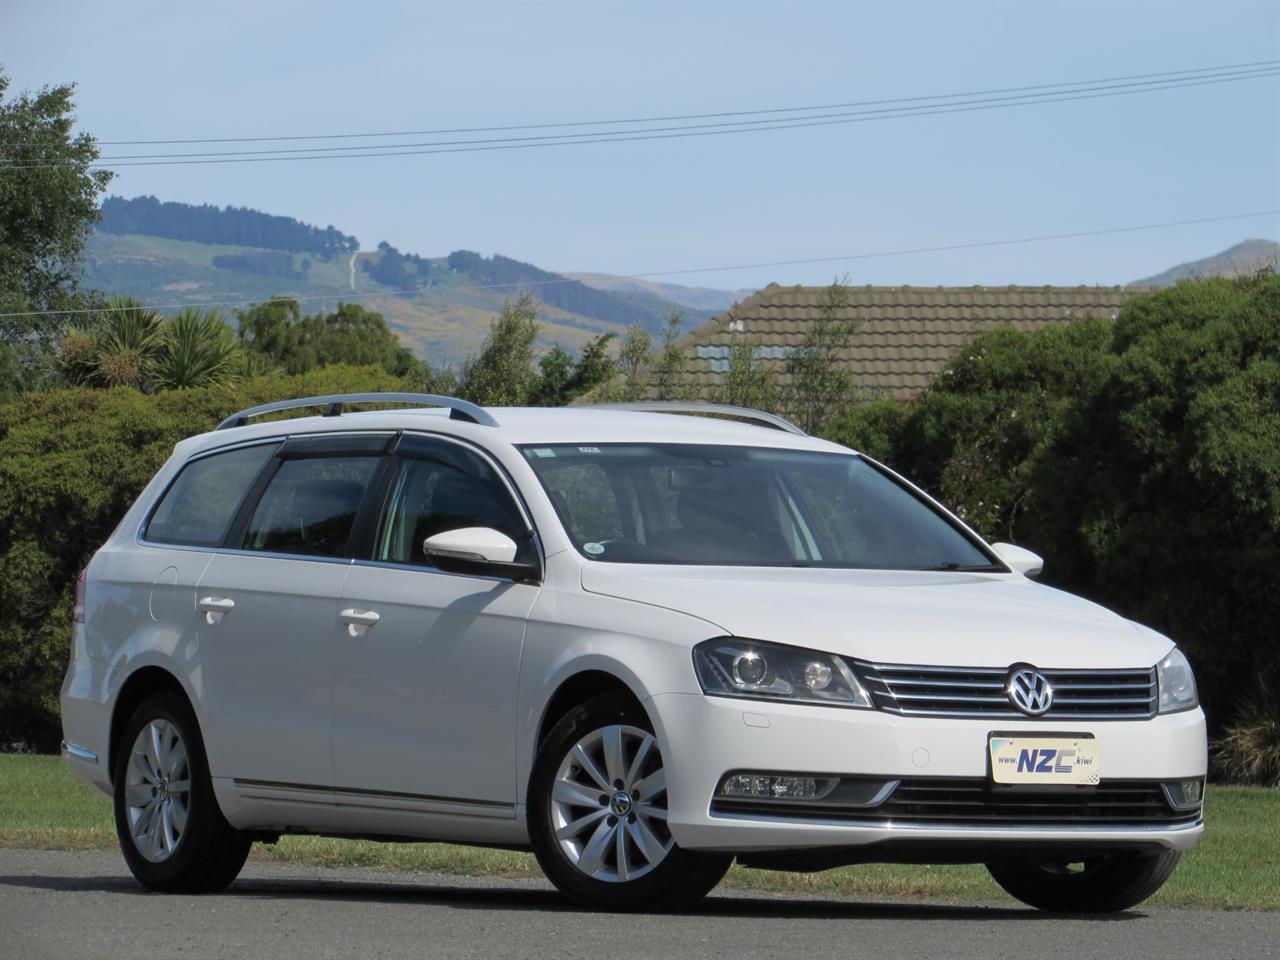 NZC 2014 Volkswagen PASSAT just arrived to Christchurch